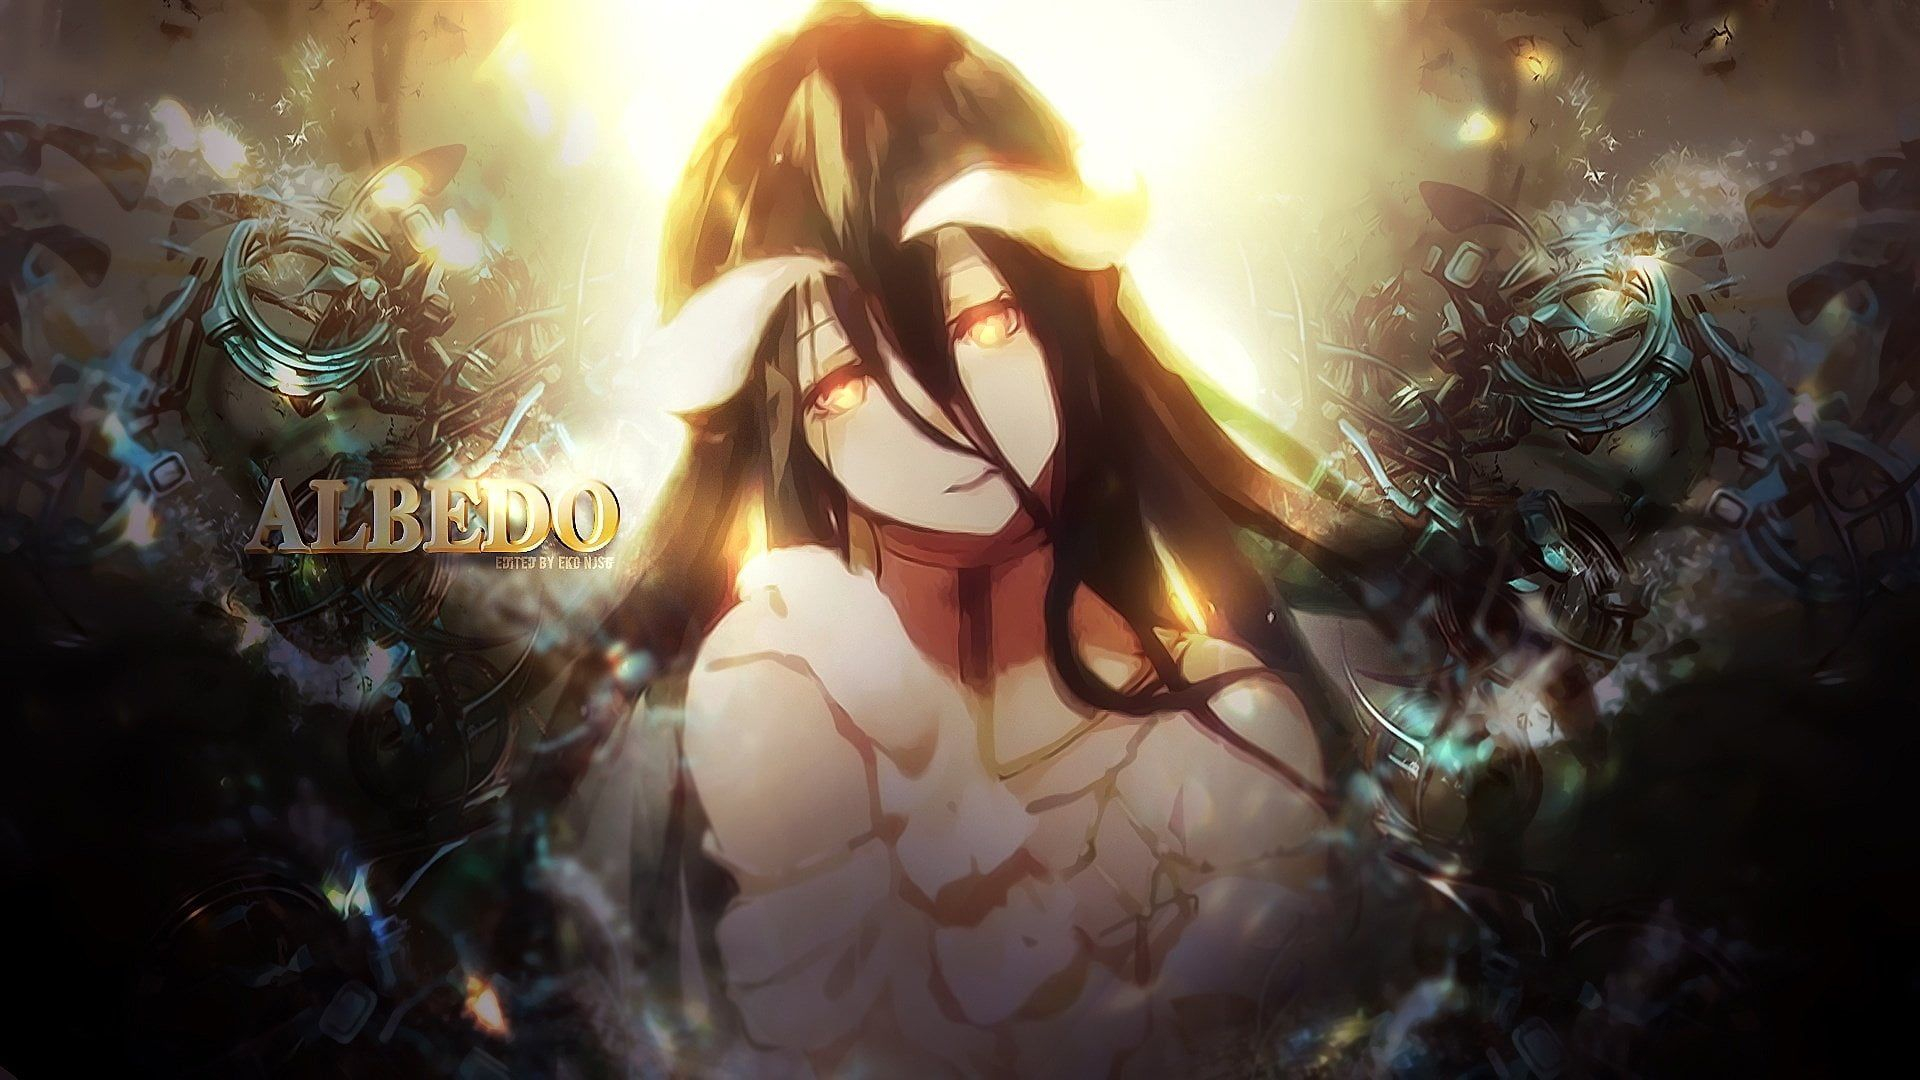 1920x1080 Albedo anime wallpaper #Anime #Overlord Albedo (Overlord) Overlord (Anime) #1080P #wallpaper #hdwallpaper #desktop | Anime wallpaper, Hd anime wallpapers, Anime